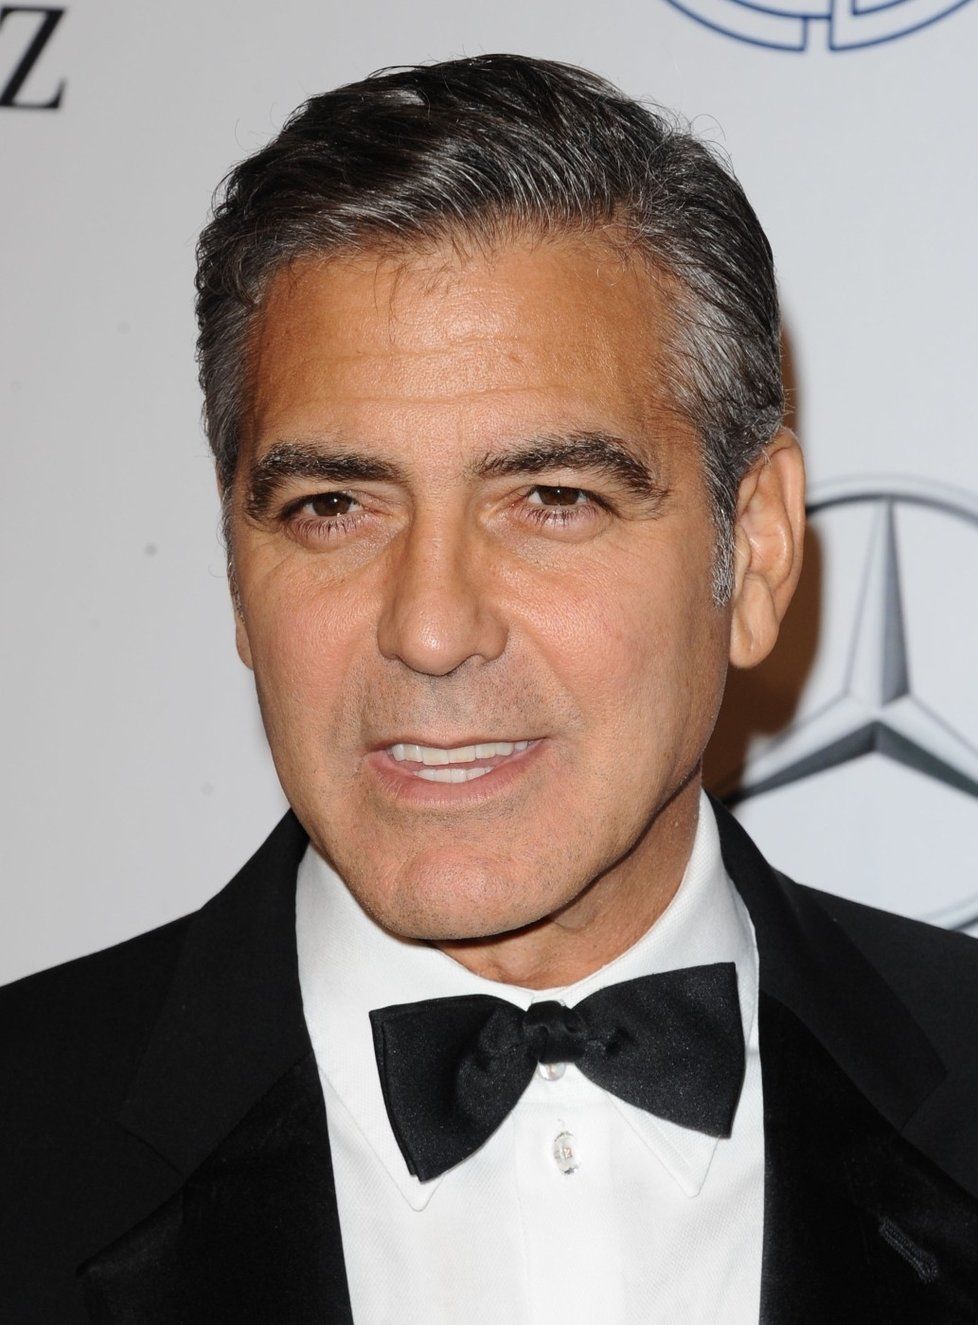 Nestárnoucí idol mnoha žen George Clooney (51) je známý z filmů Dannyho parťáci, Lítám v tom či Děti moje. Doma má Zlatý glóbus i Oscara.